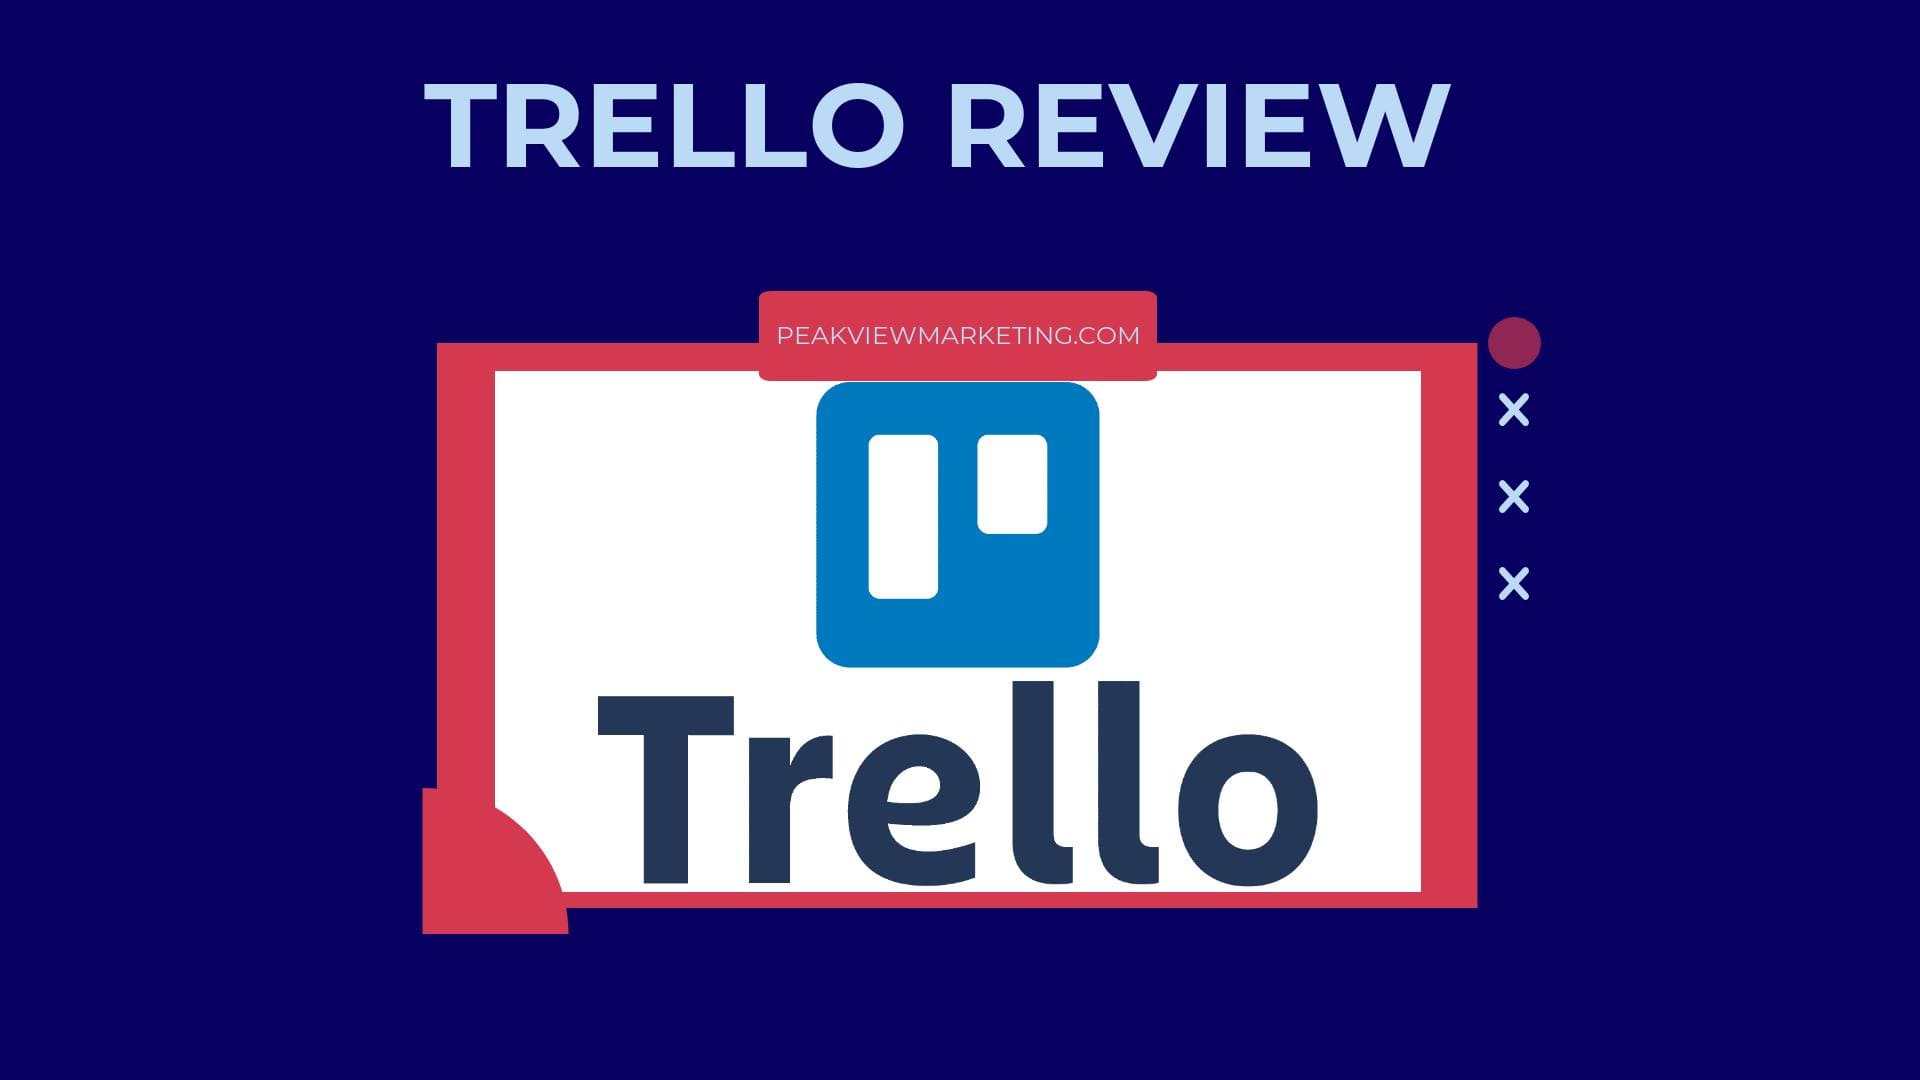 Trello Review Image